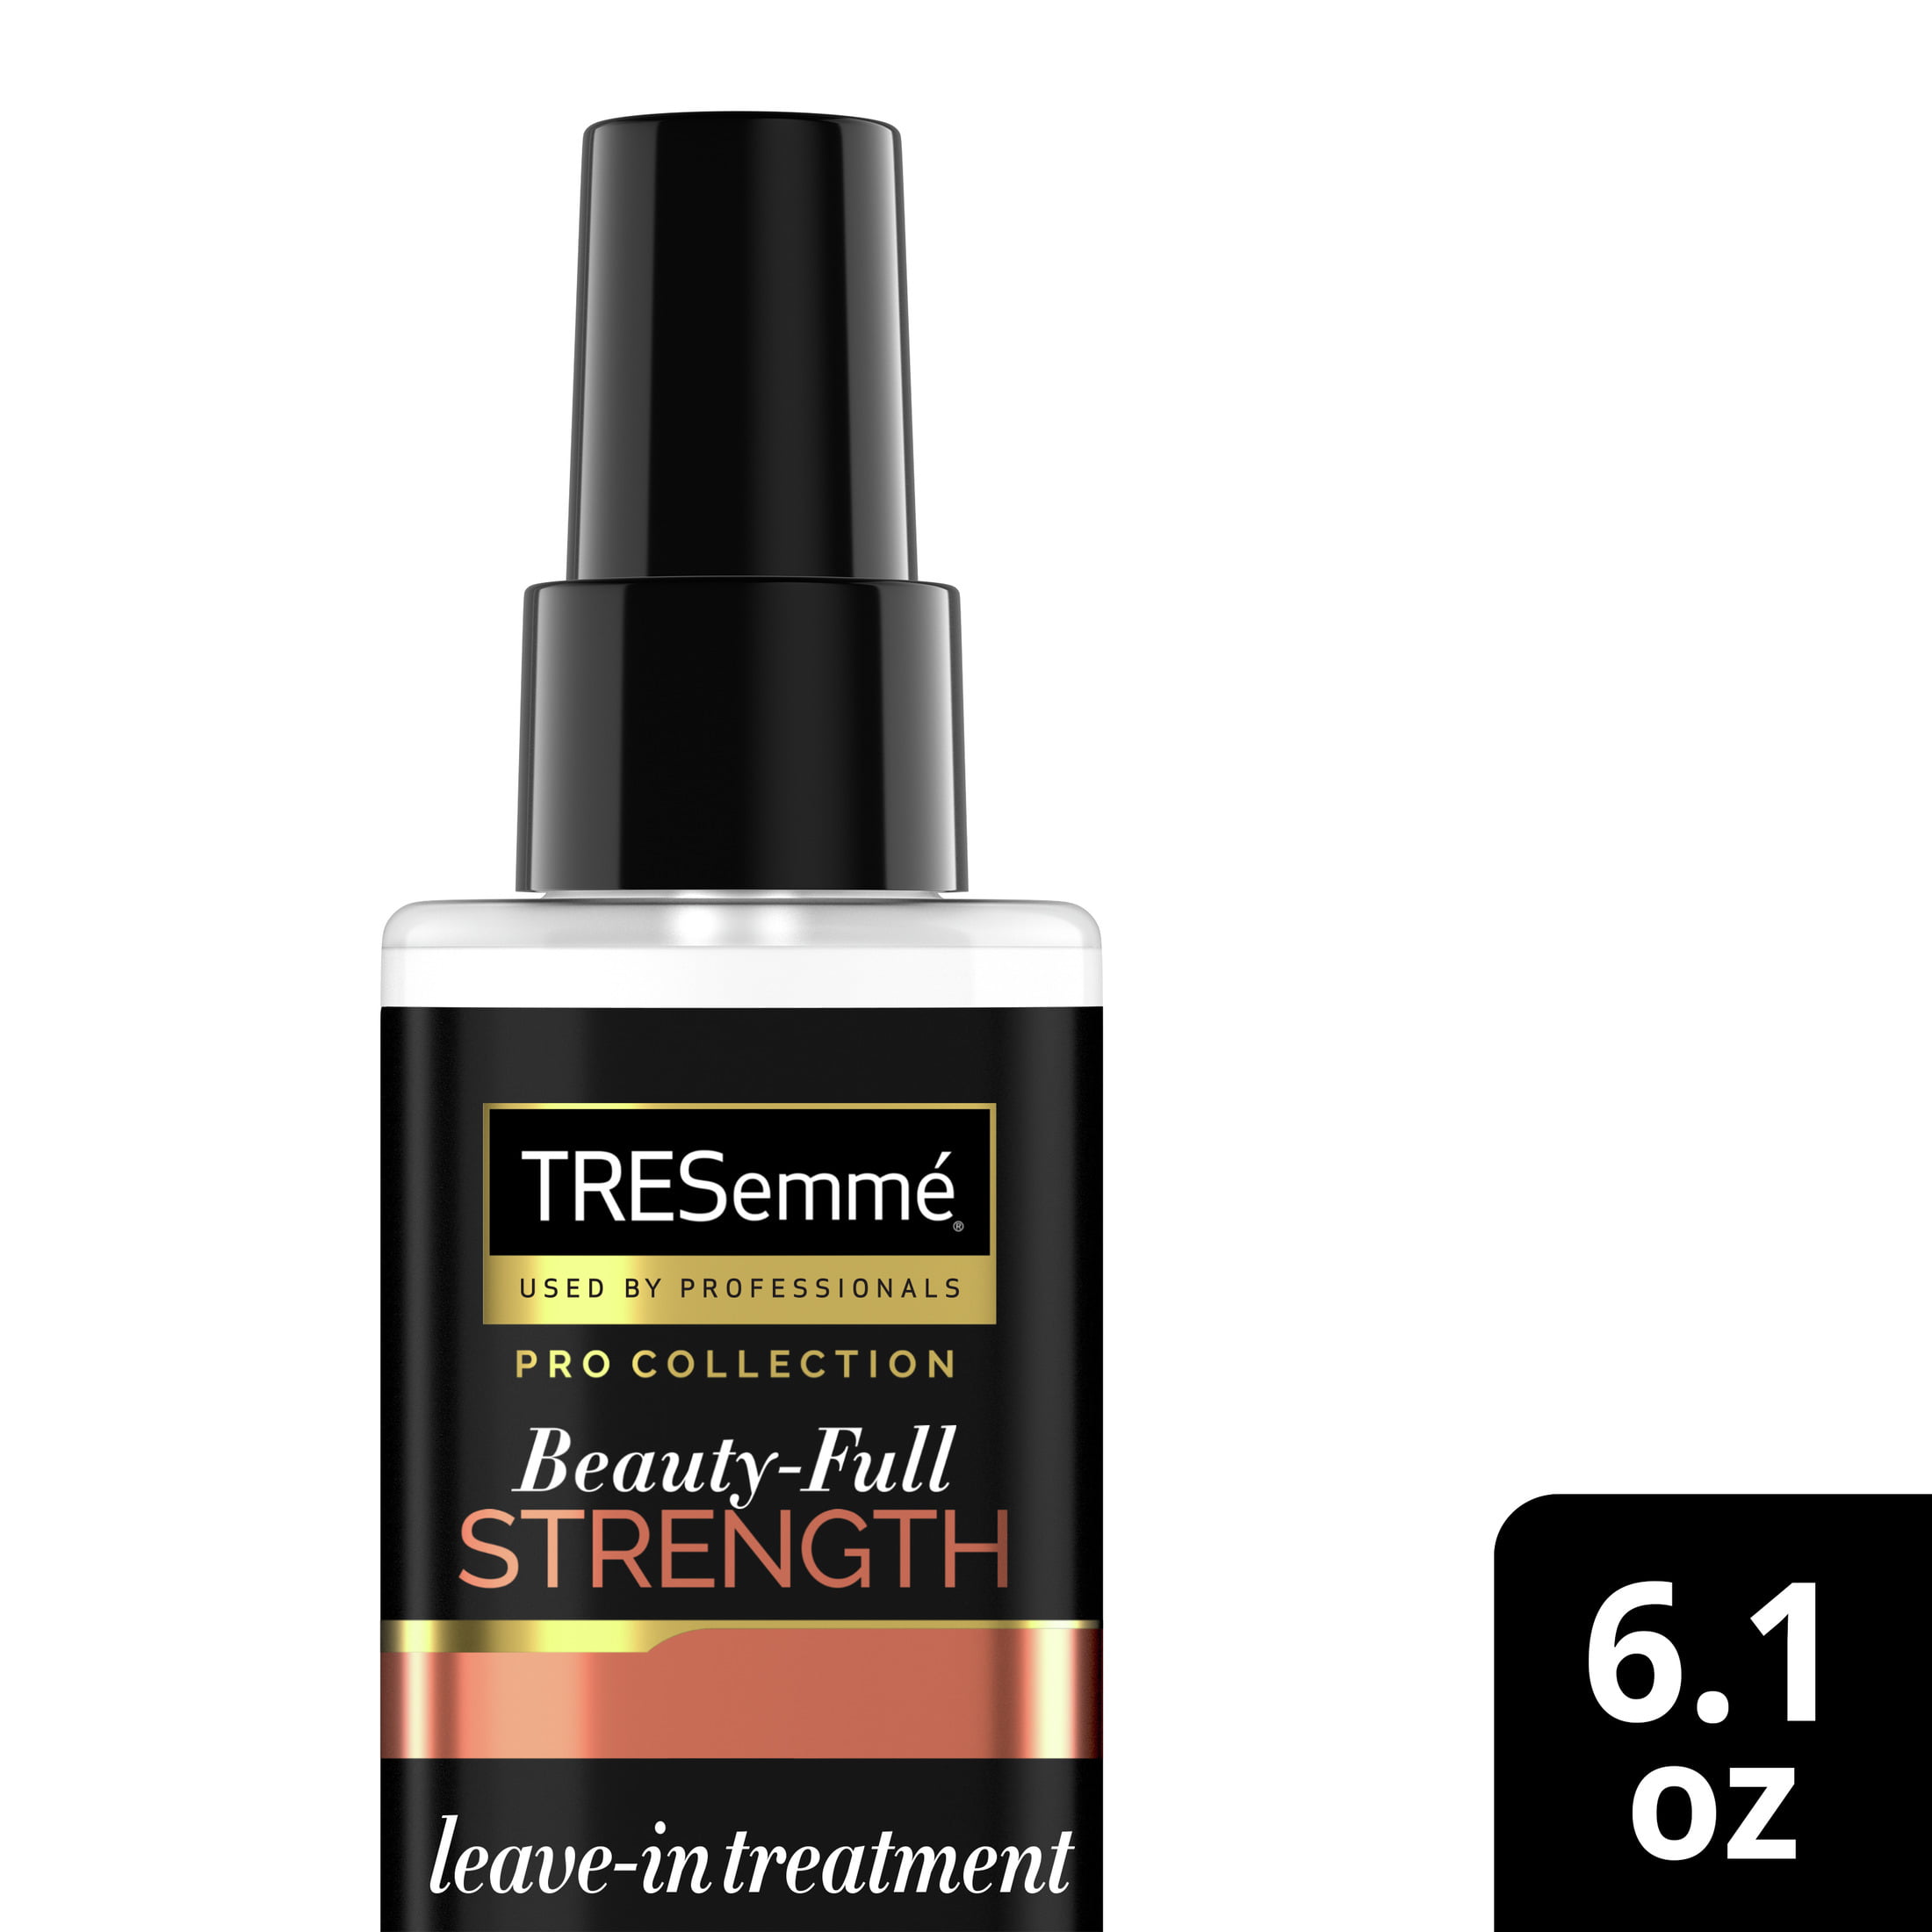 TRESemme Strengthening Leave-In Treatment, Beauty-Full Strength for Fine, Damaged Hair, 6.1 oz